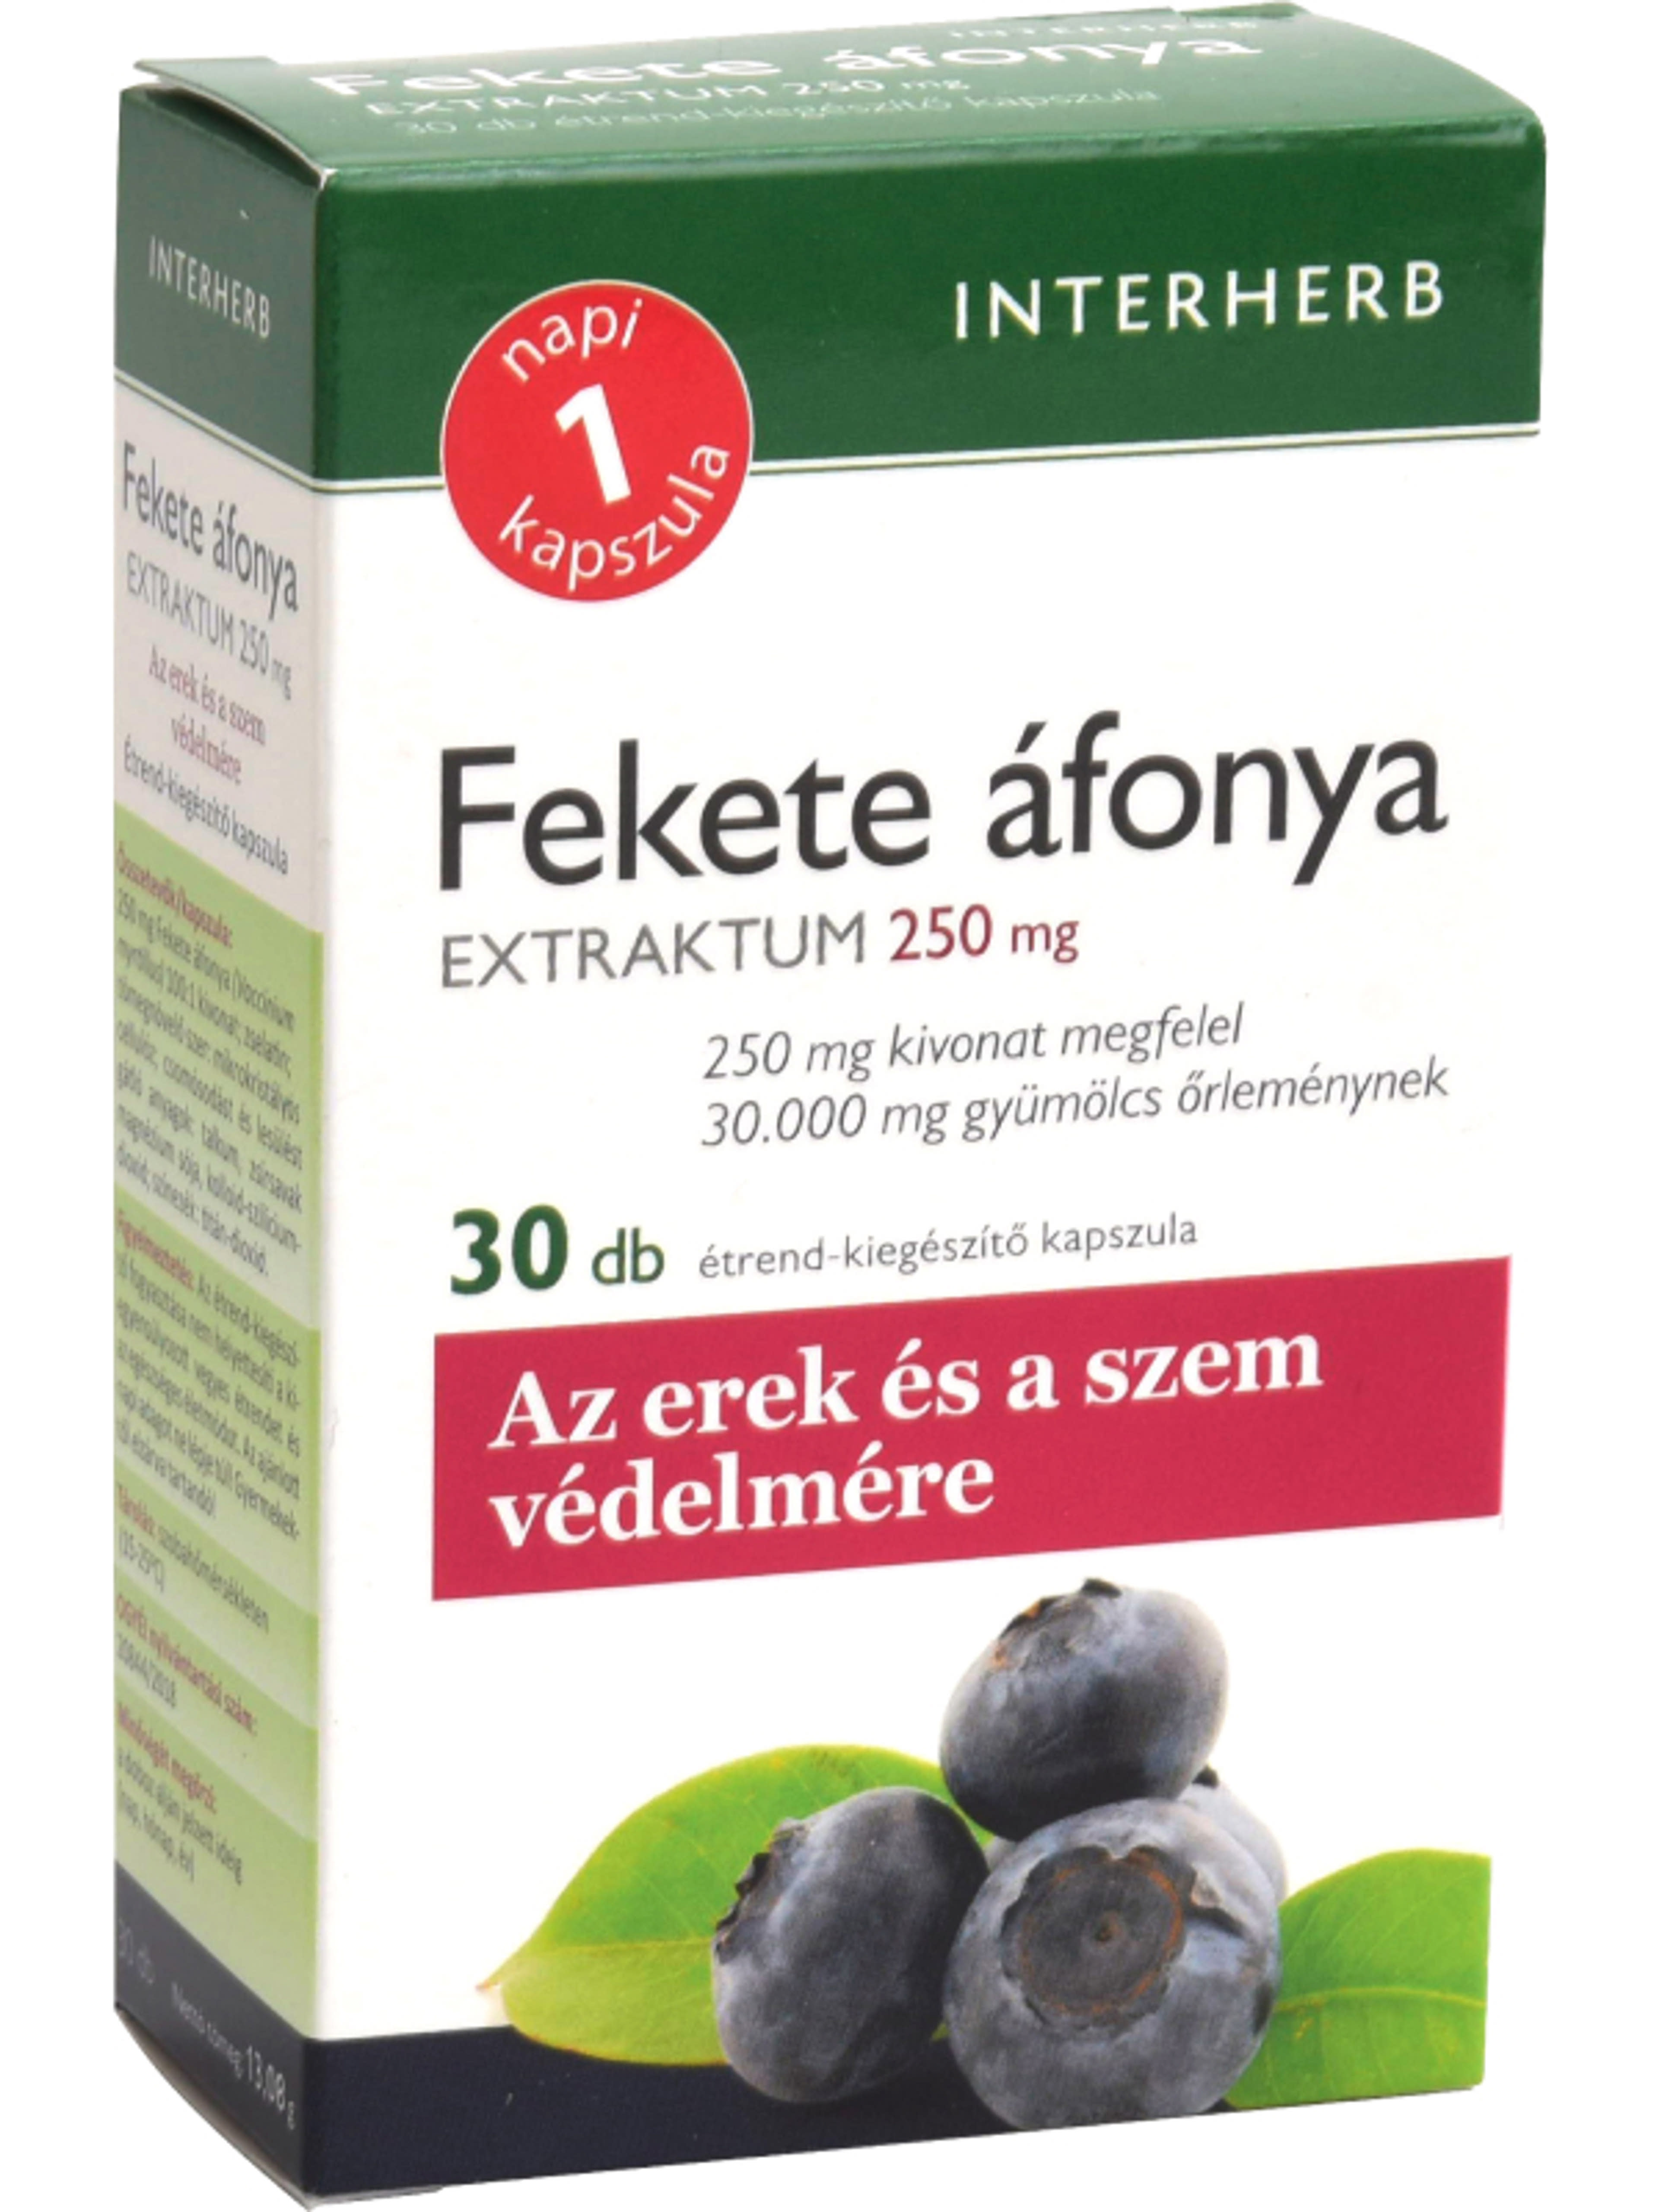 Interherb napi 1 fekete áfonya extraktum 250 mg - 30 db-1